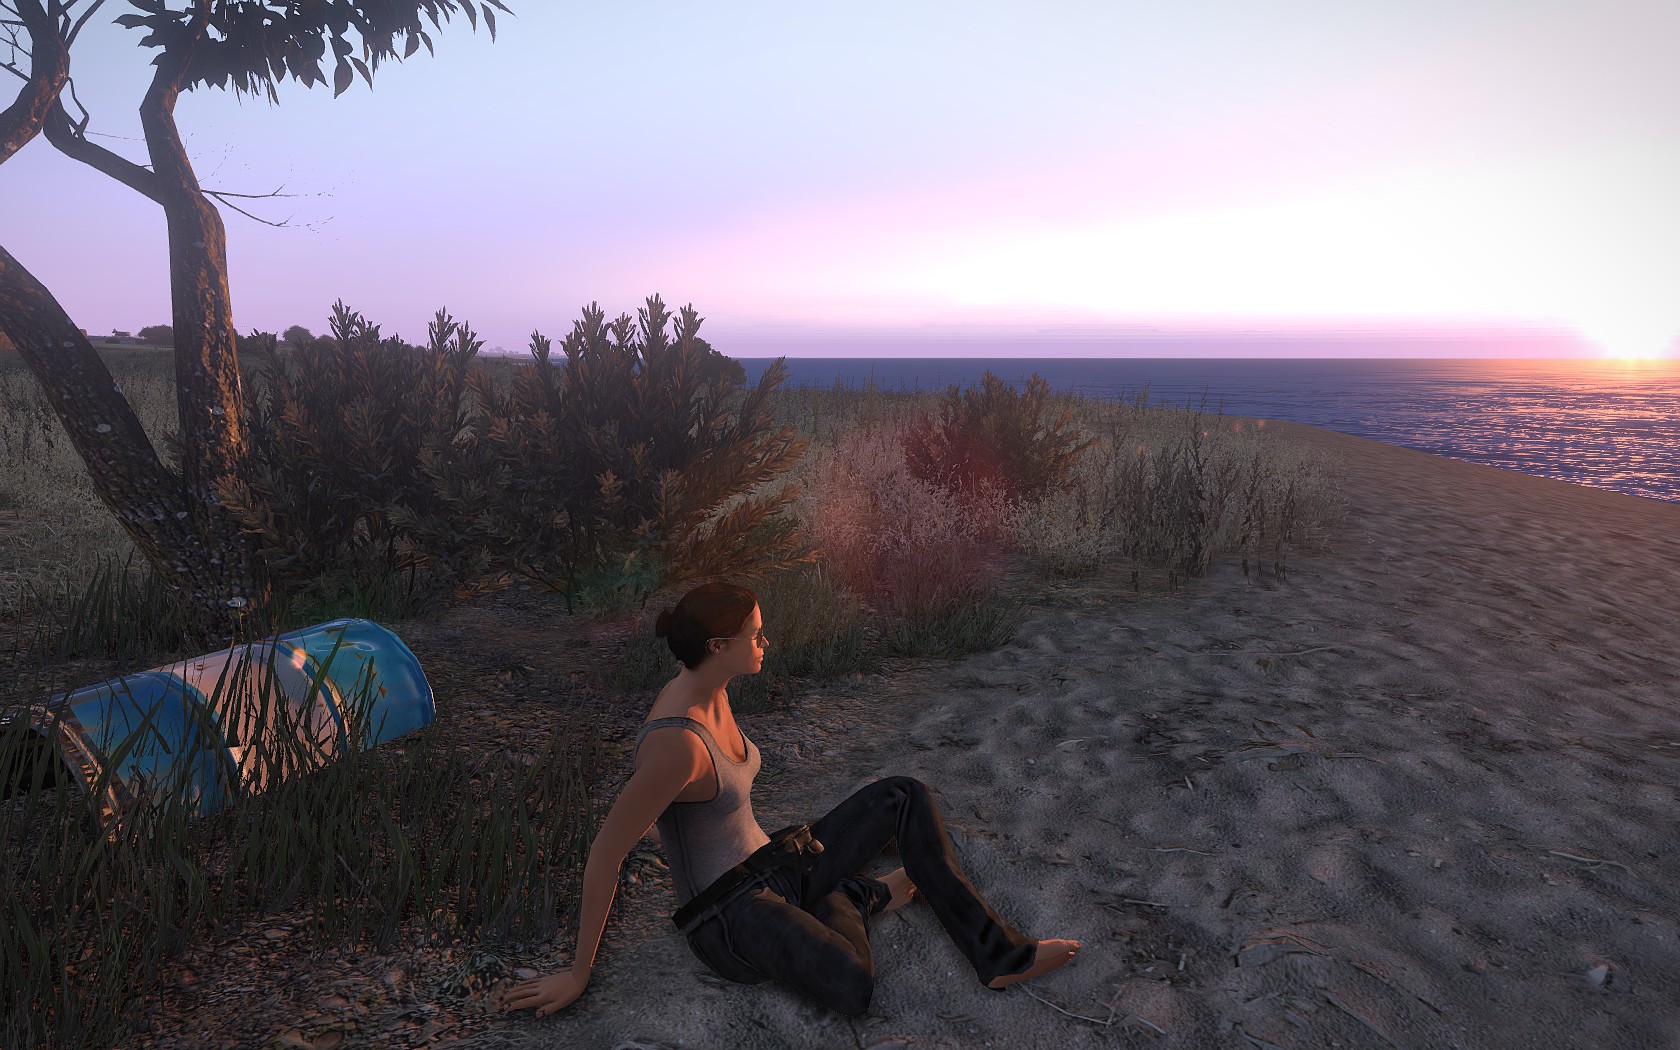 Keesha watching sunset image - Epoch mod for ARMA 3.